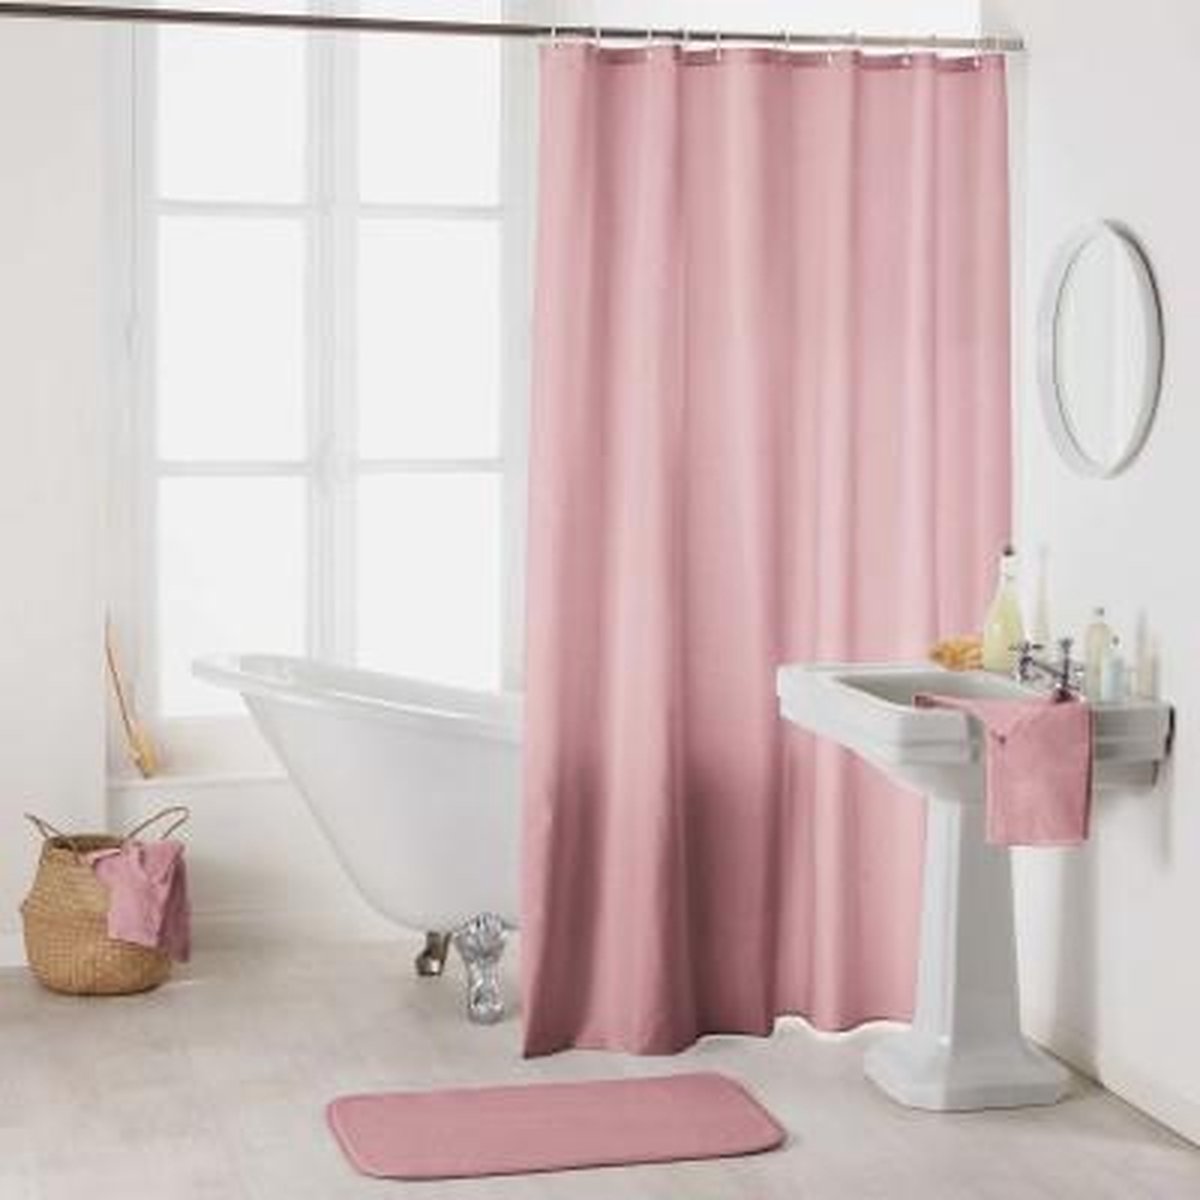 Livetti | Douchegordijn - Shower Curtain | 180x200 cm | Candy Roze | Inclusief Ringen